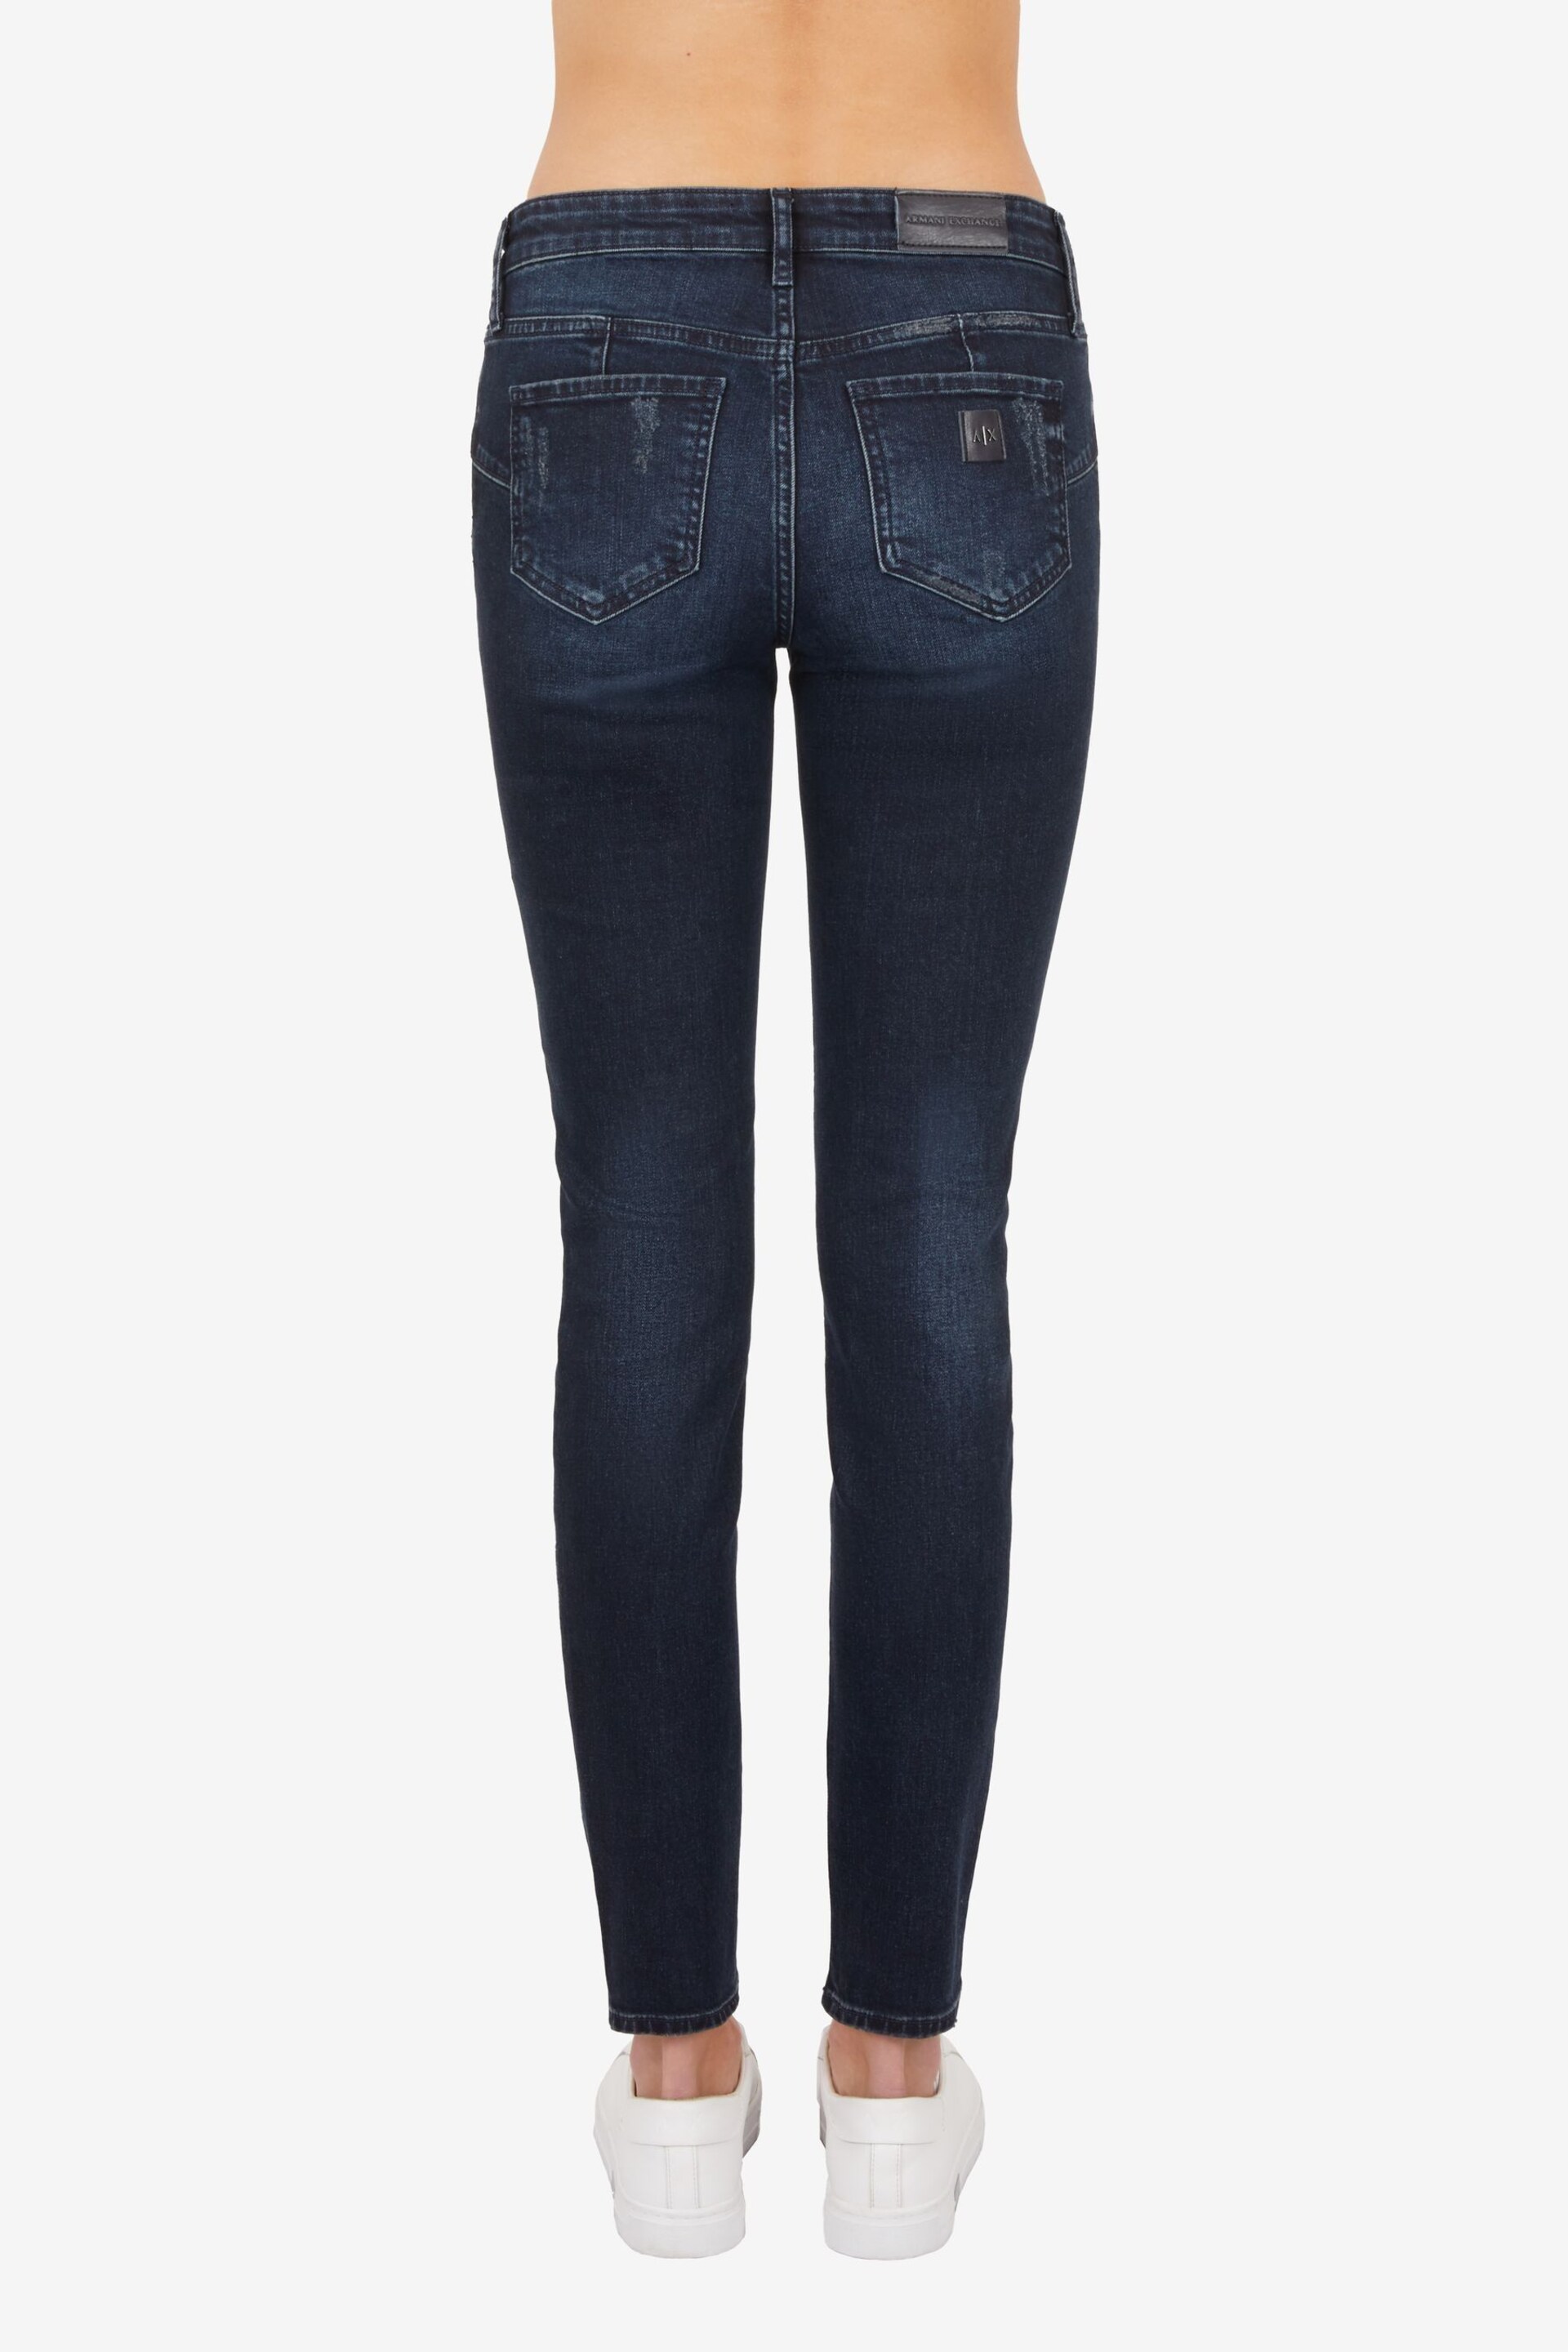 Armani Exchange Denim Dark Wash J69 Skinny Fit Jeans - Image 2 of 5